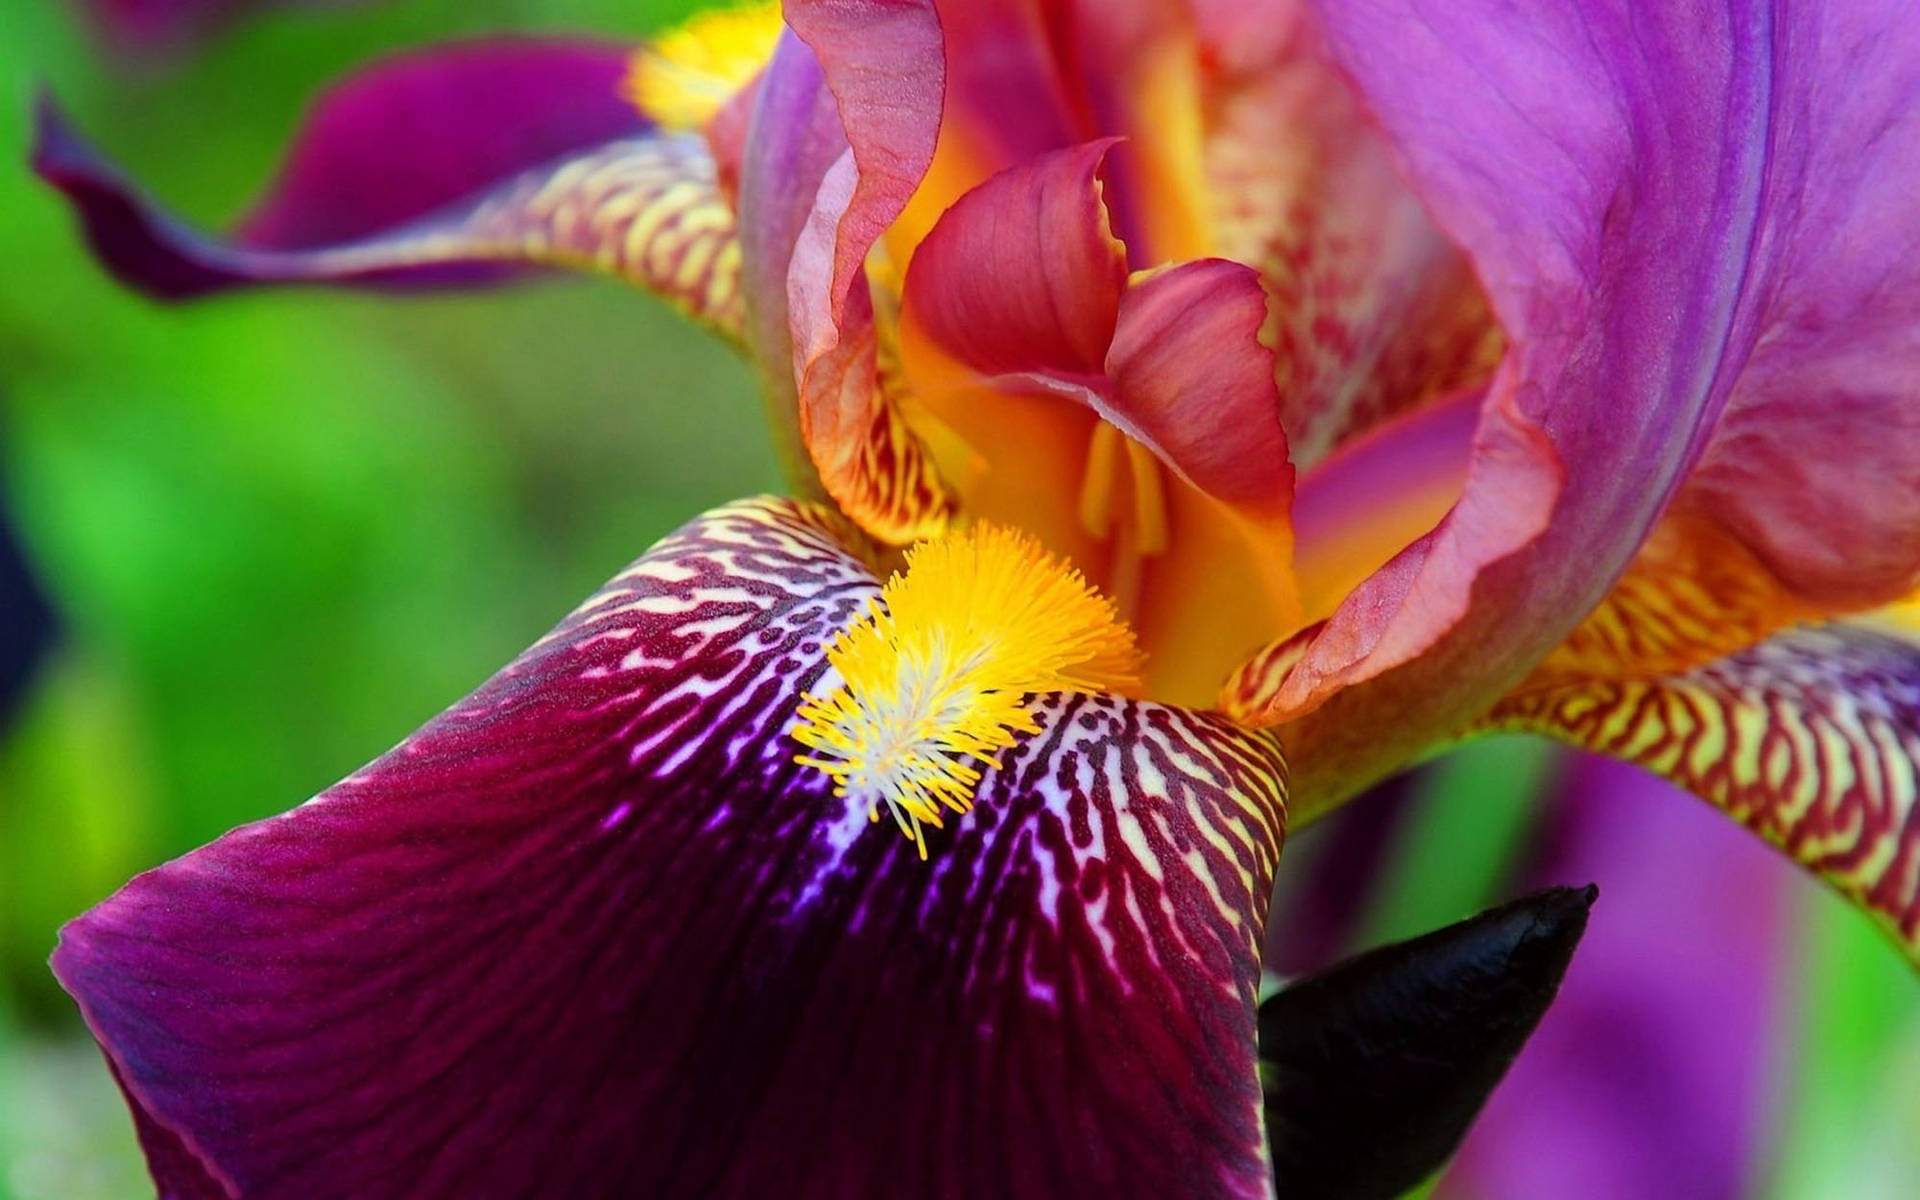 Pink Bearded Iris Flower